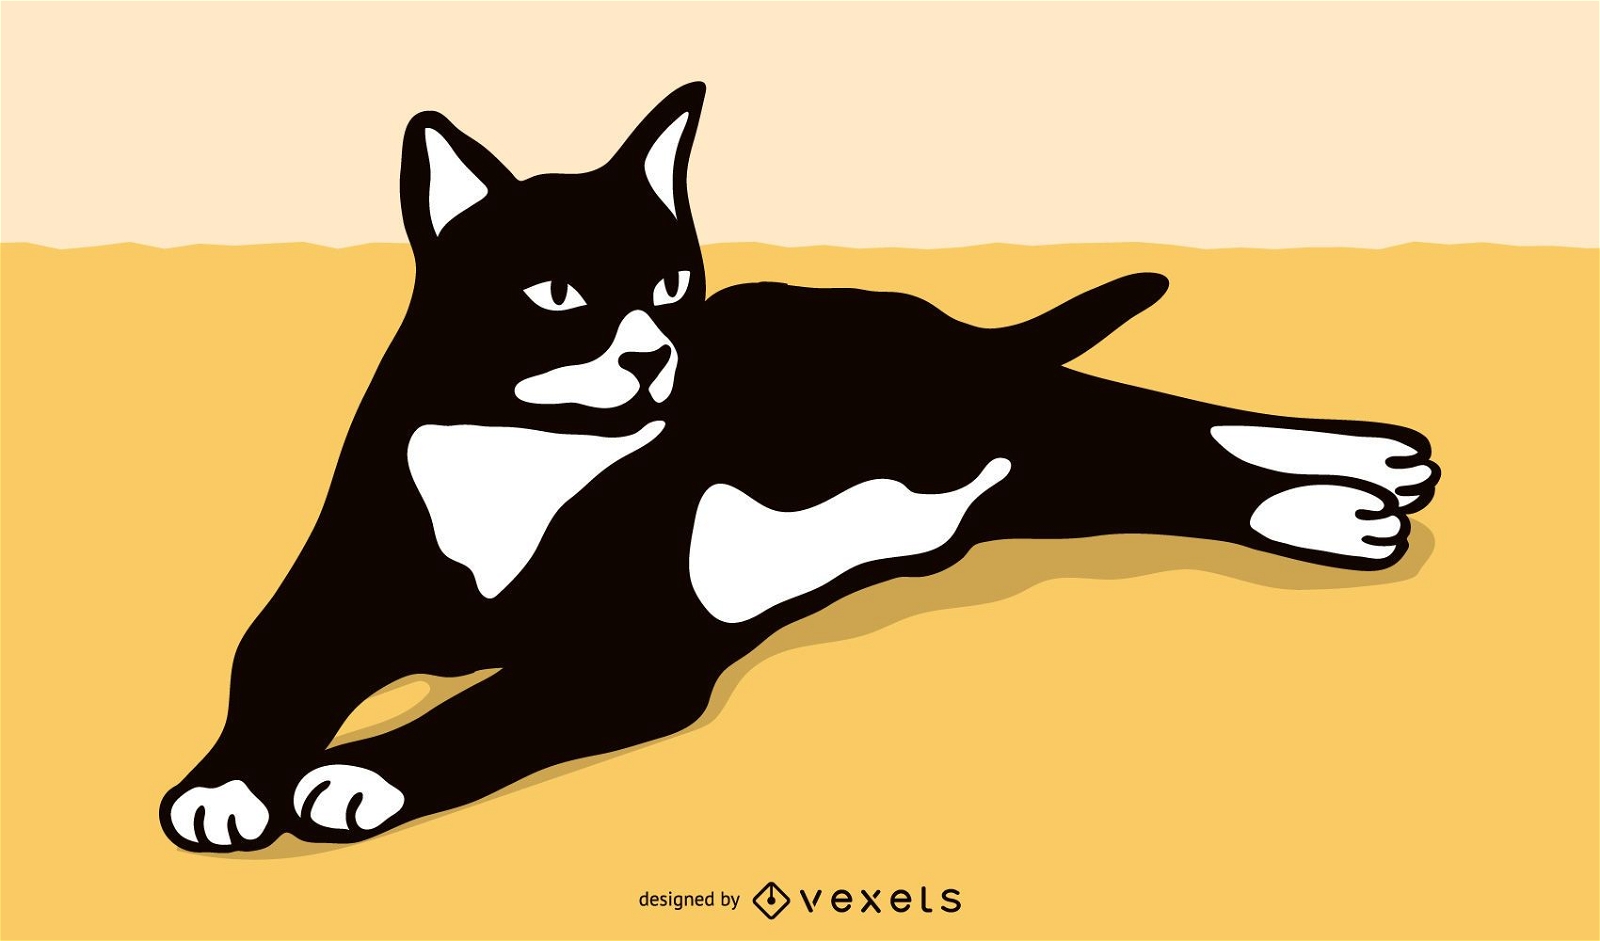 Lying cat illustration design